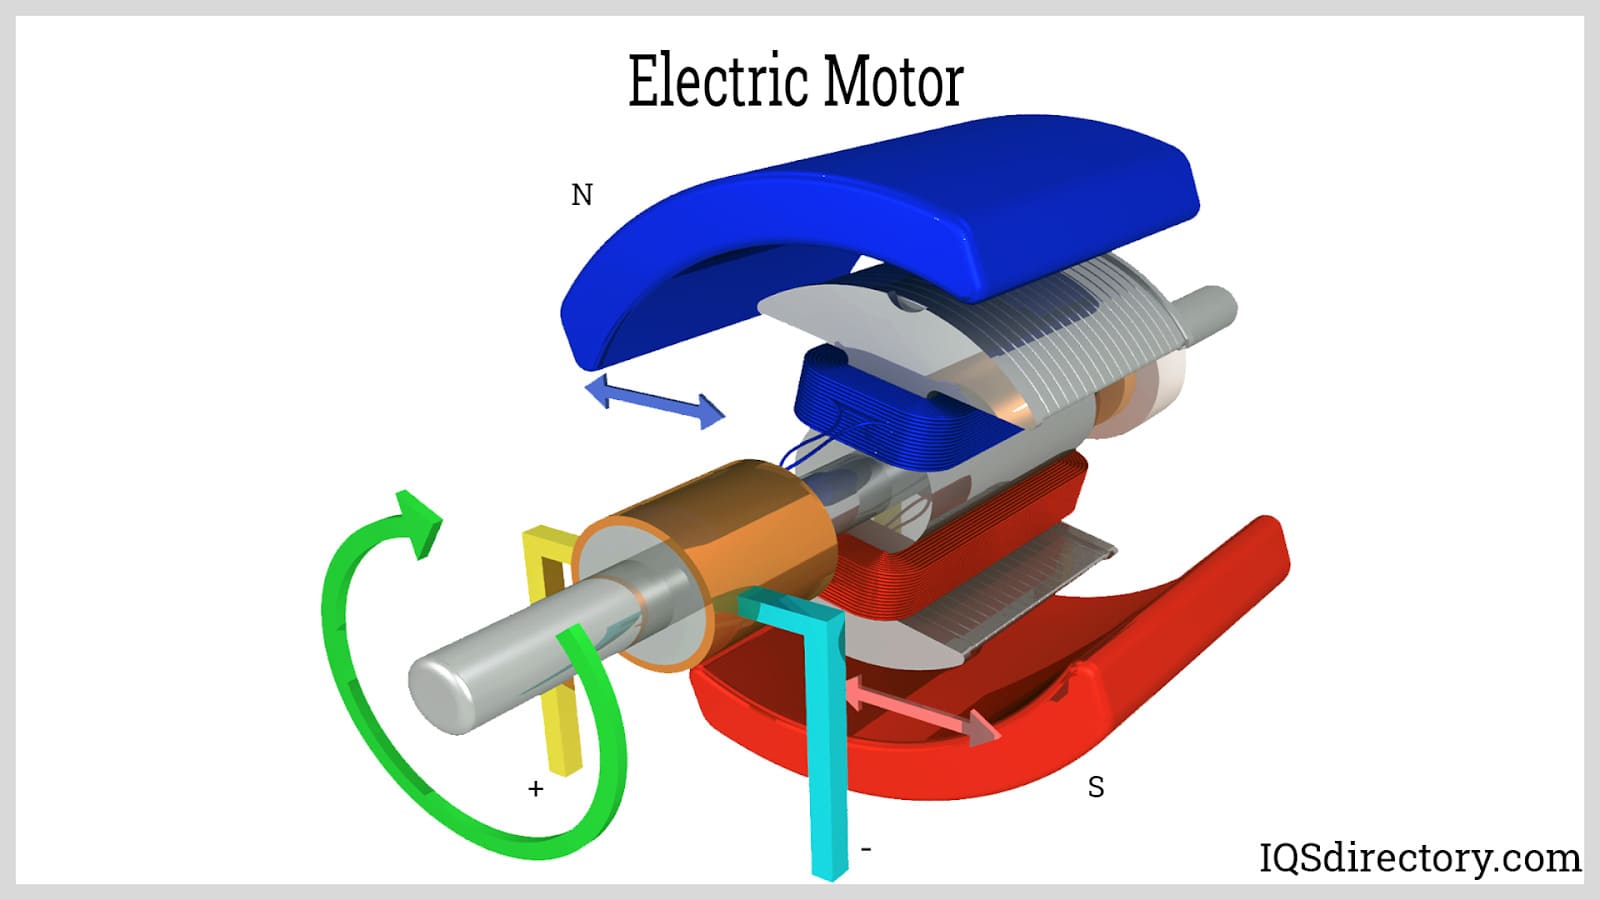 https://www.iqsdirectory.com/articles/electric-motor/electric-motor.jpg